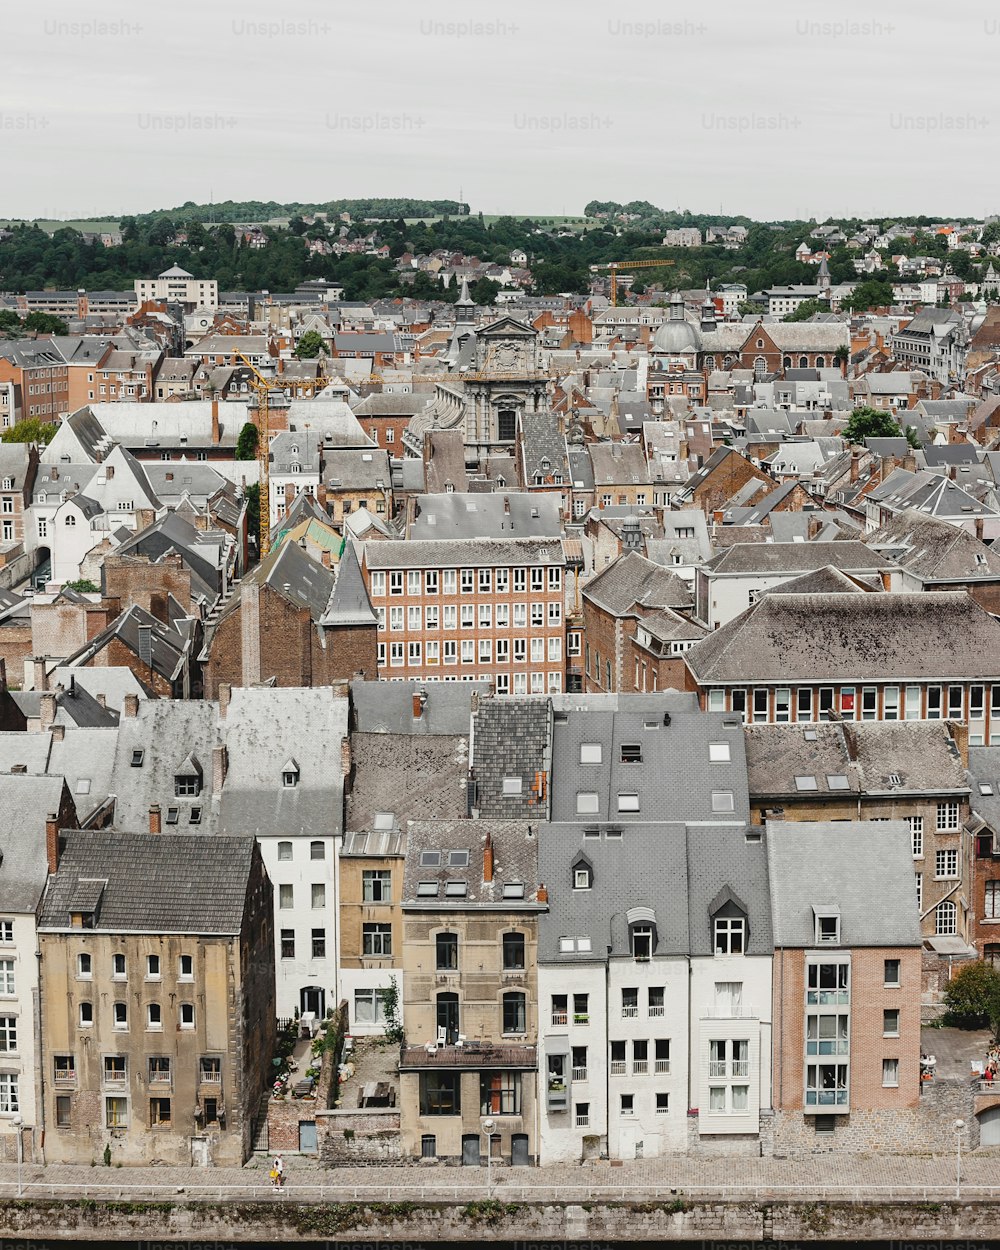 Una vista di una città da un punto di vista alto